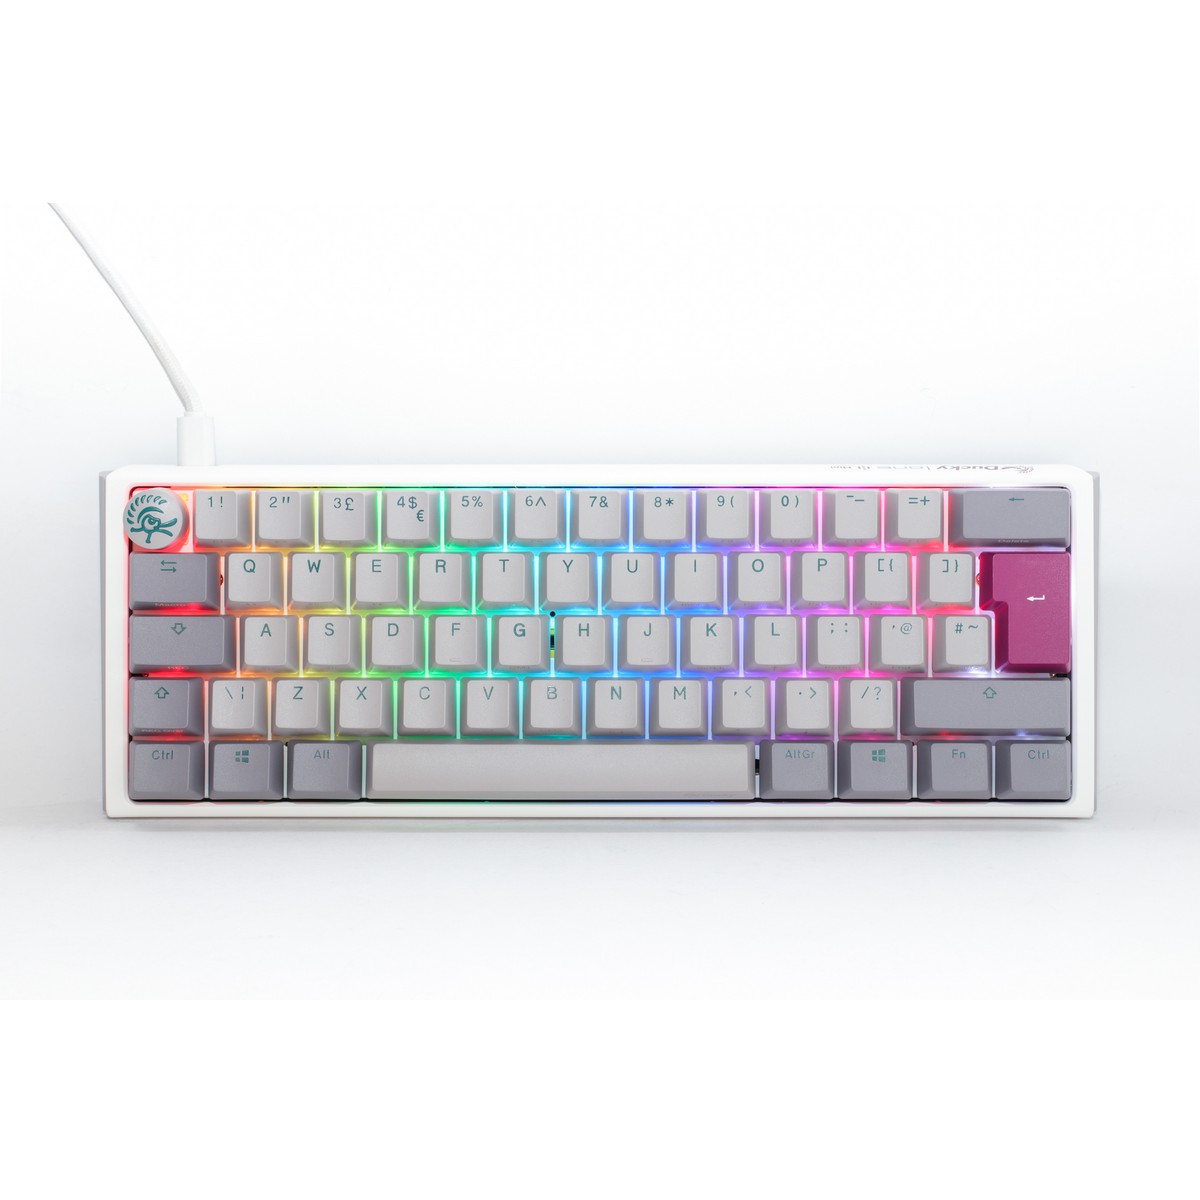 Ducky One 3 Mist Mini 60% USB RGB Mechanical Gaming Keyboard Cherry MX Blue Switch - UK Layout